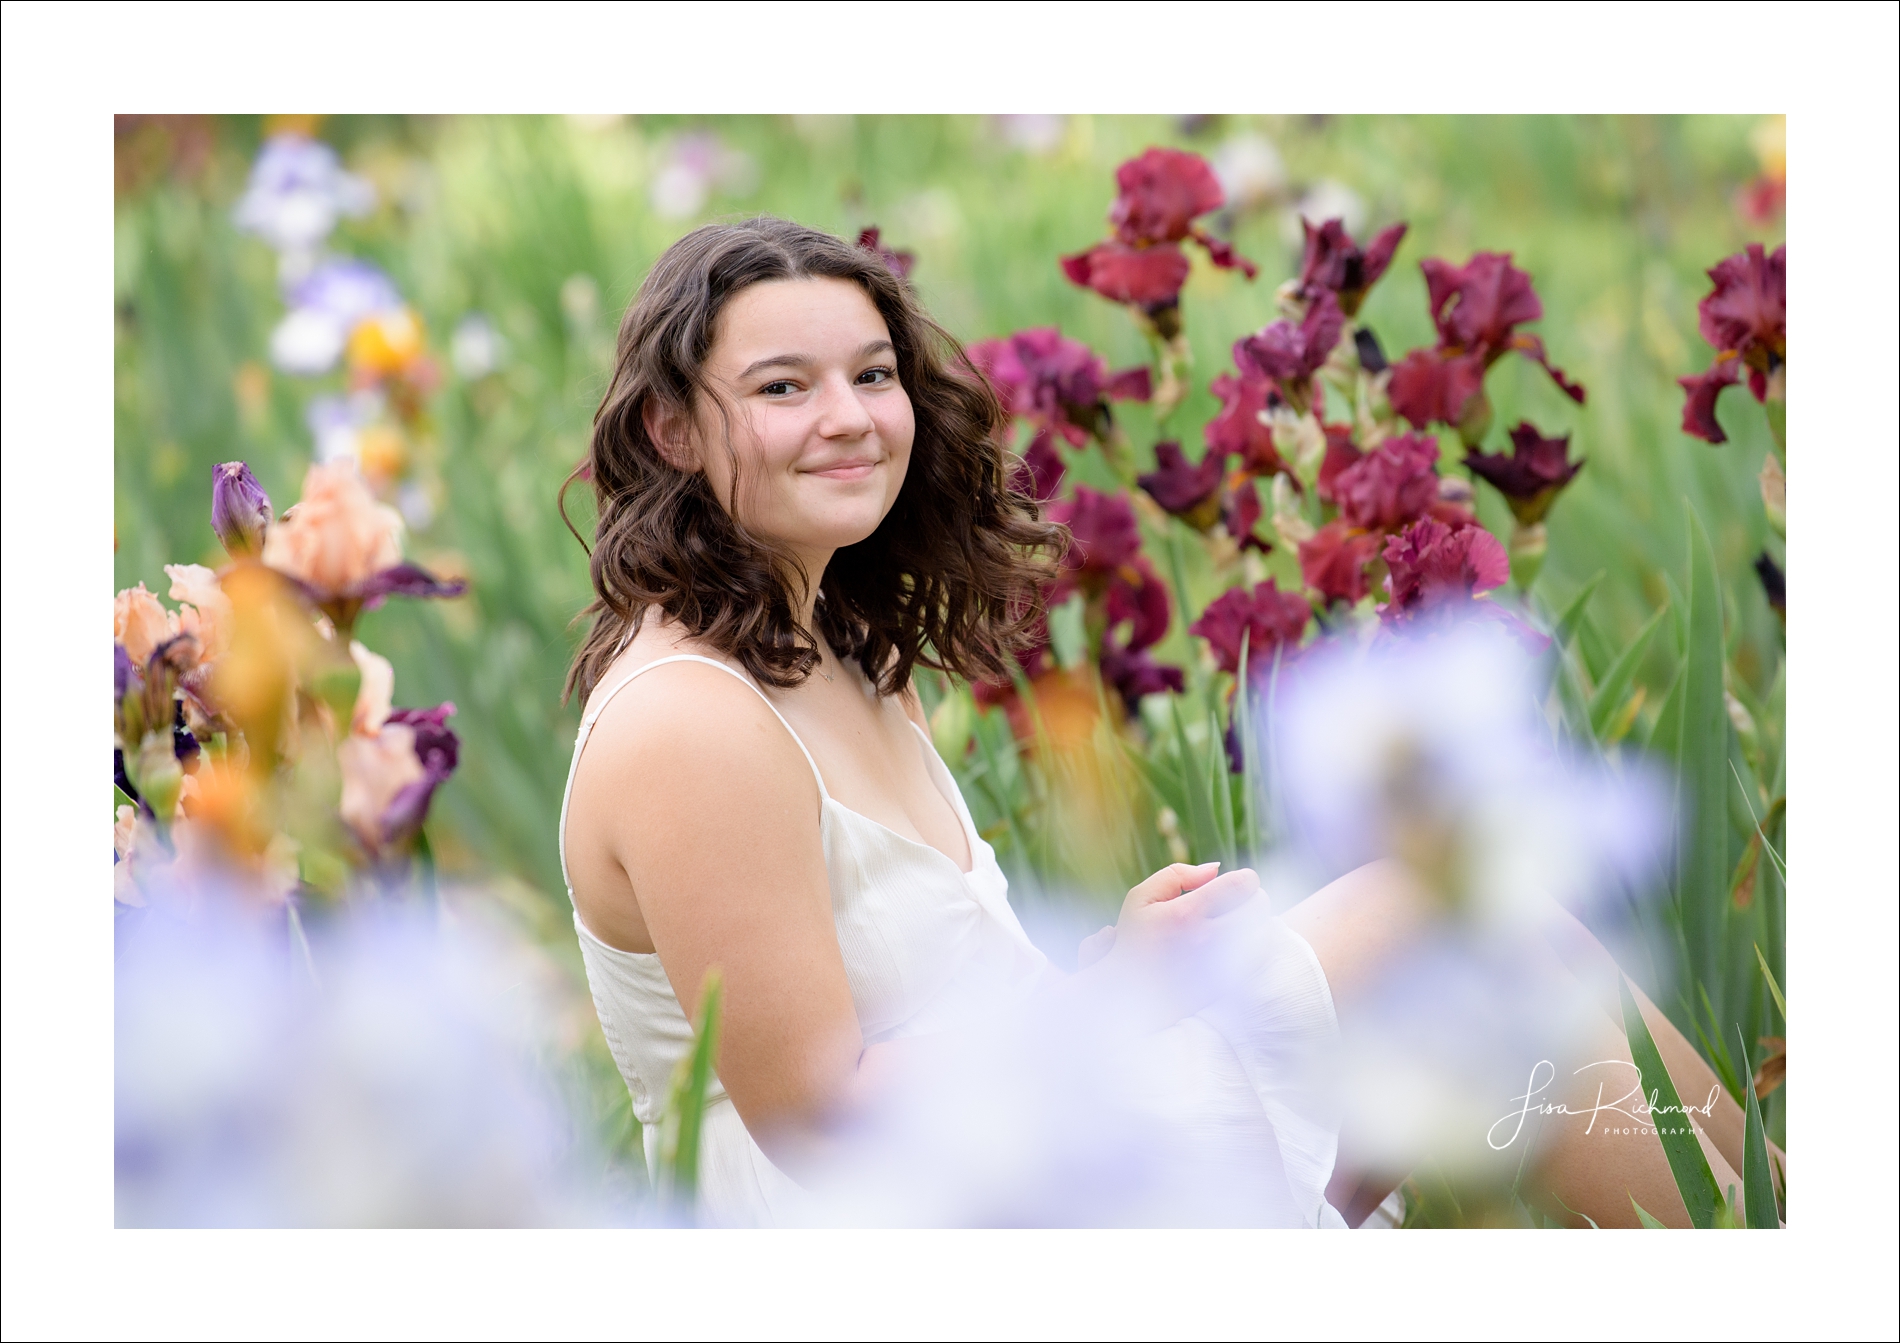 Taylor, Class of 2020 Vista del Lago High School in Folsom at the High Sierra Wedding and Iris Gardens